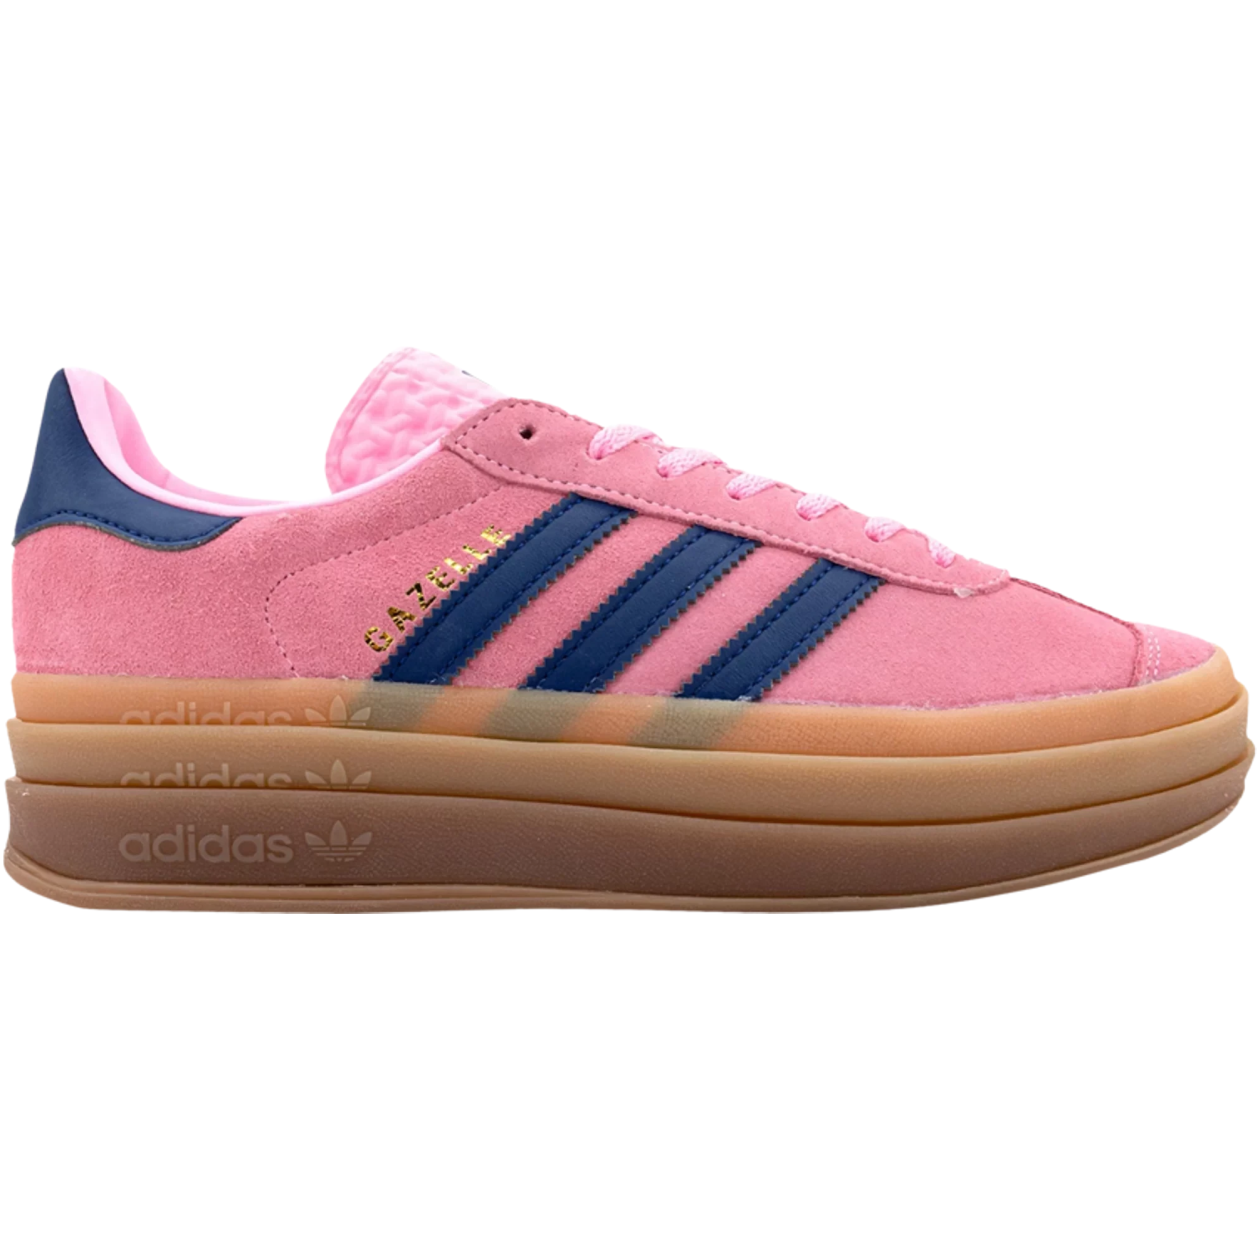 Socialista Miedo a morir Anestésico Gazelle Bold Pink Glow Gum – Sneakers Joint